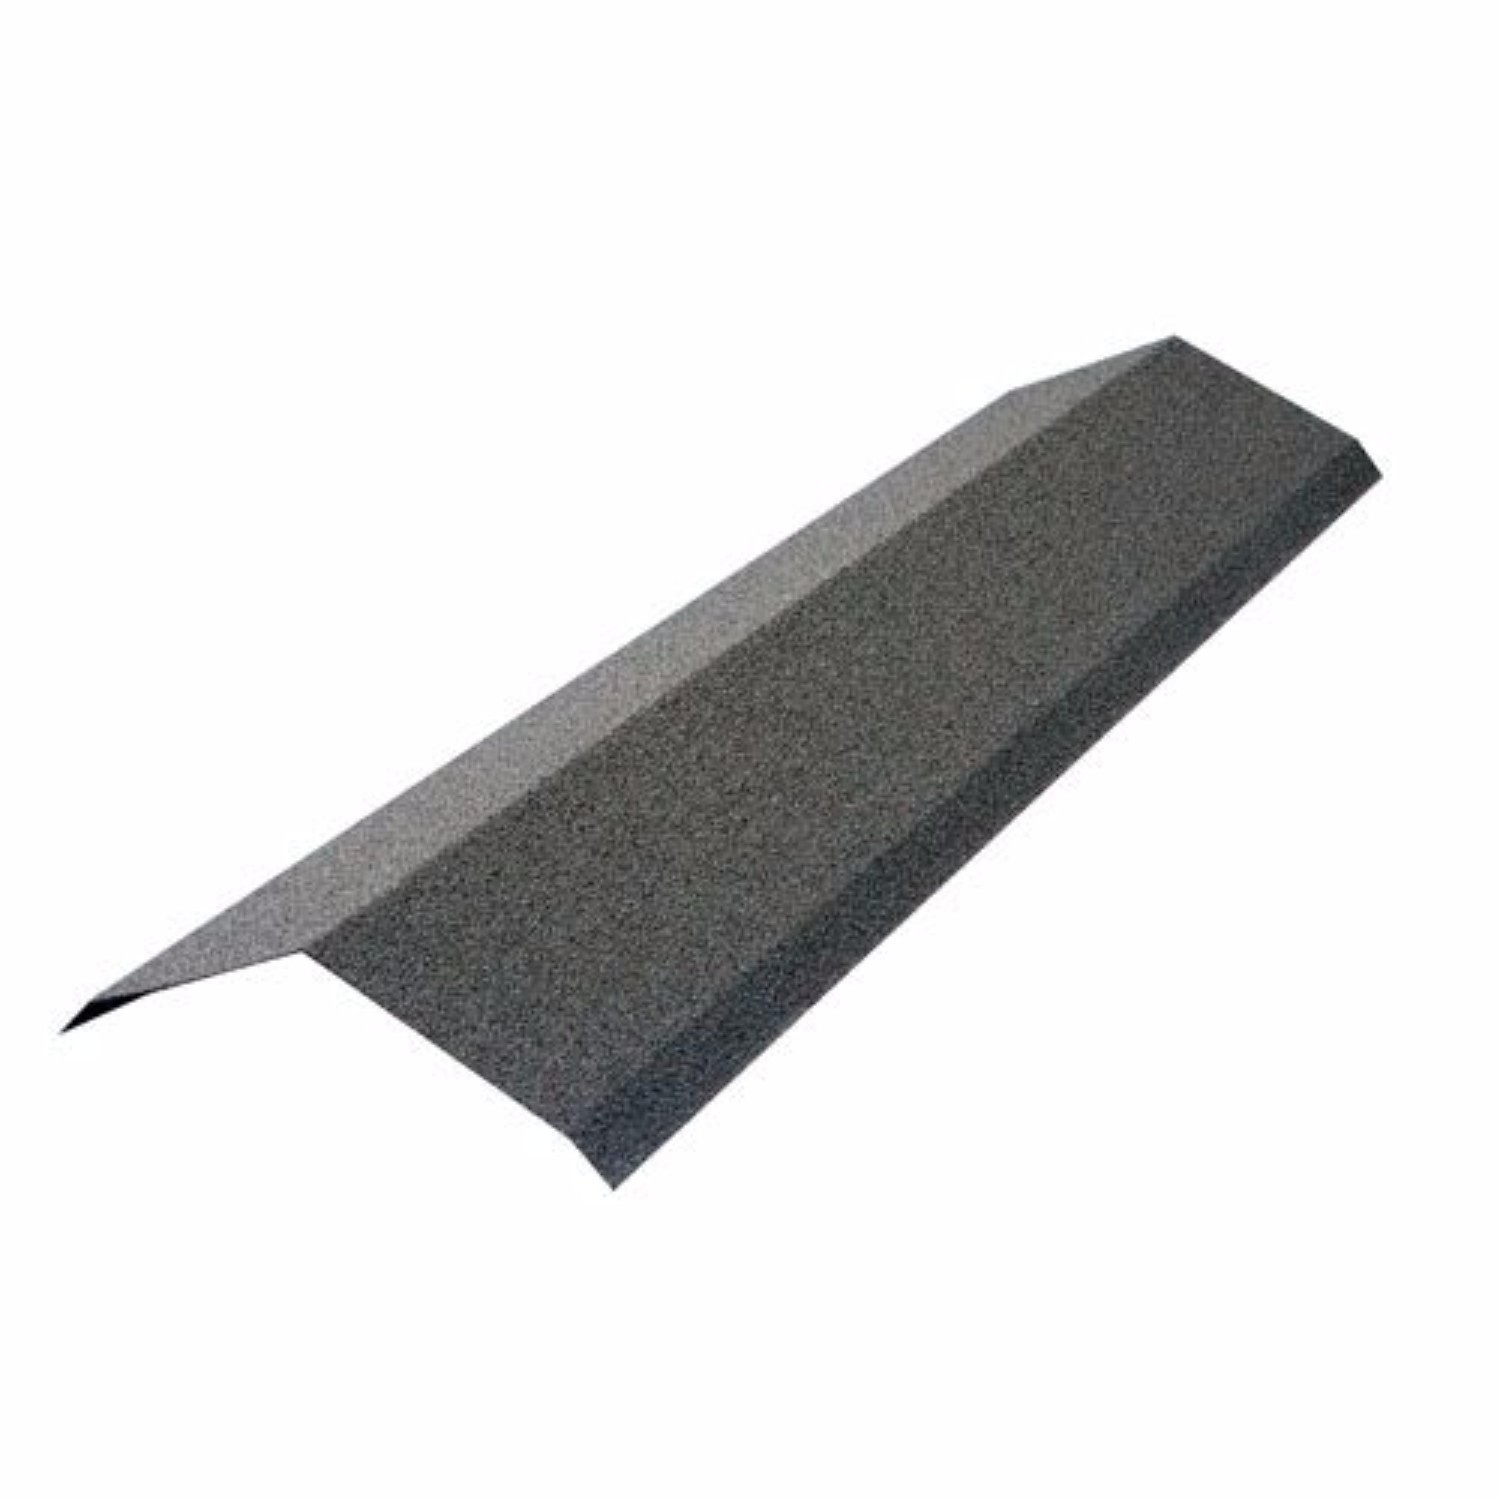 Corotile Lightweight Metal Roofing Sheet - Ridge - Charcoal (910mm)